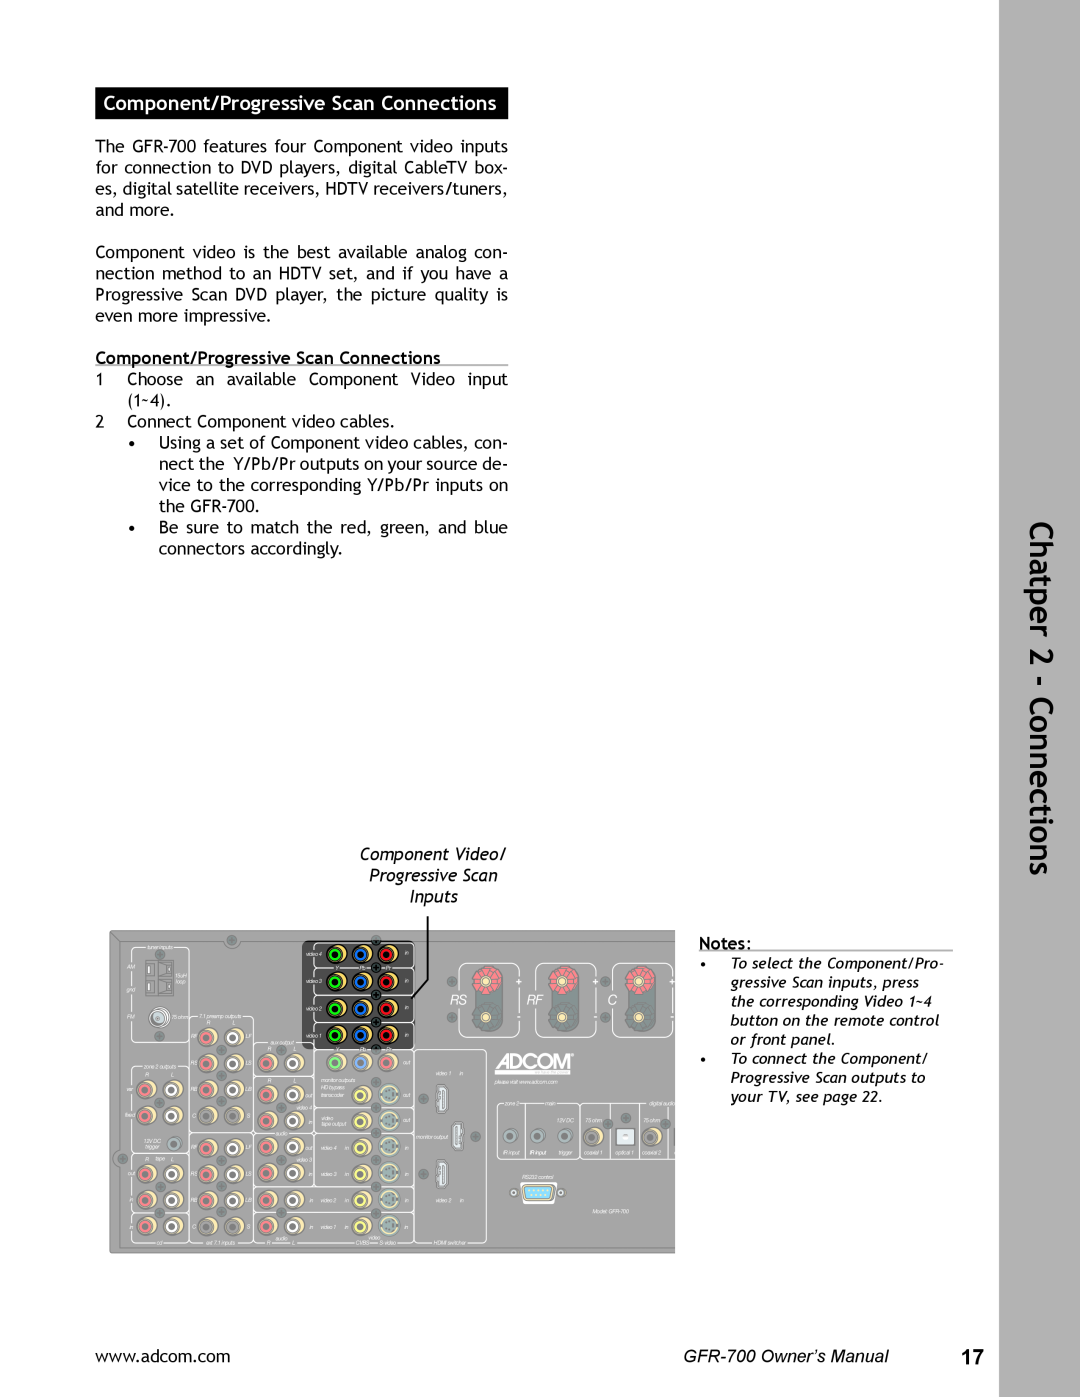 Adcom GFR-700 Chatper 2 - Connections, Component Video Progressive Scan Inputs, Component/Progressive Scan Connections 